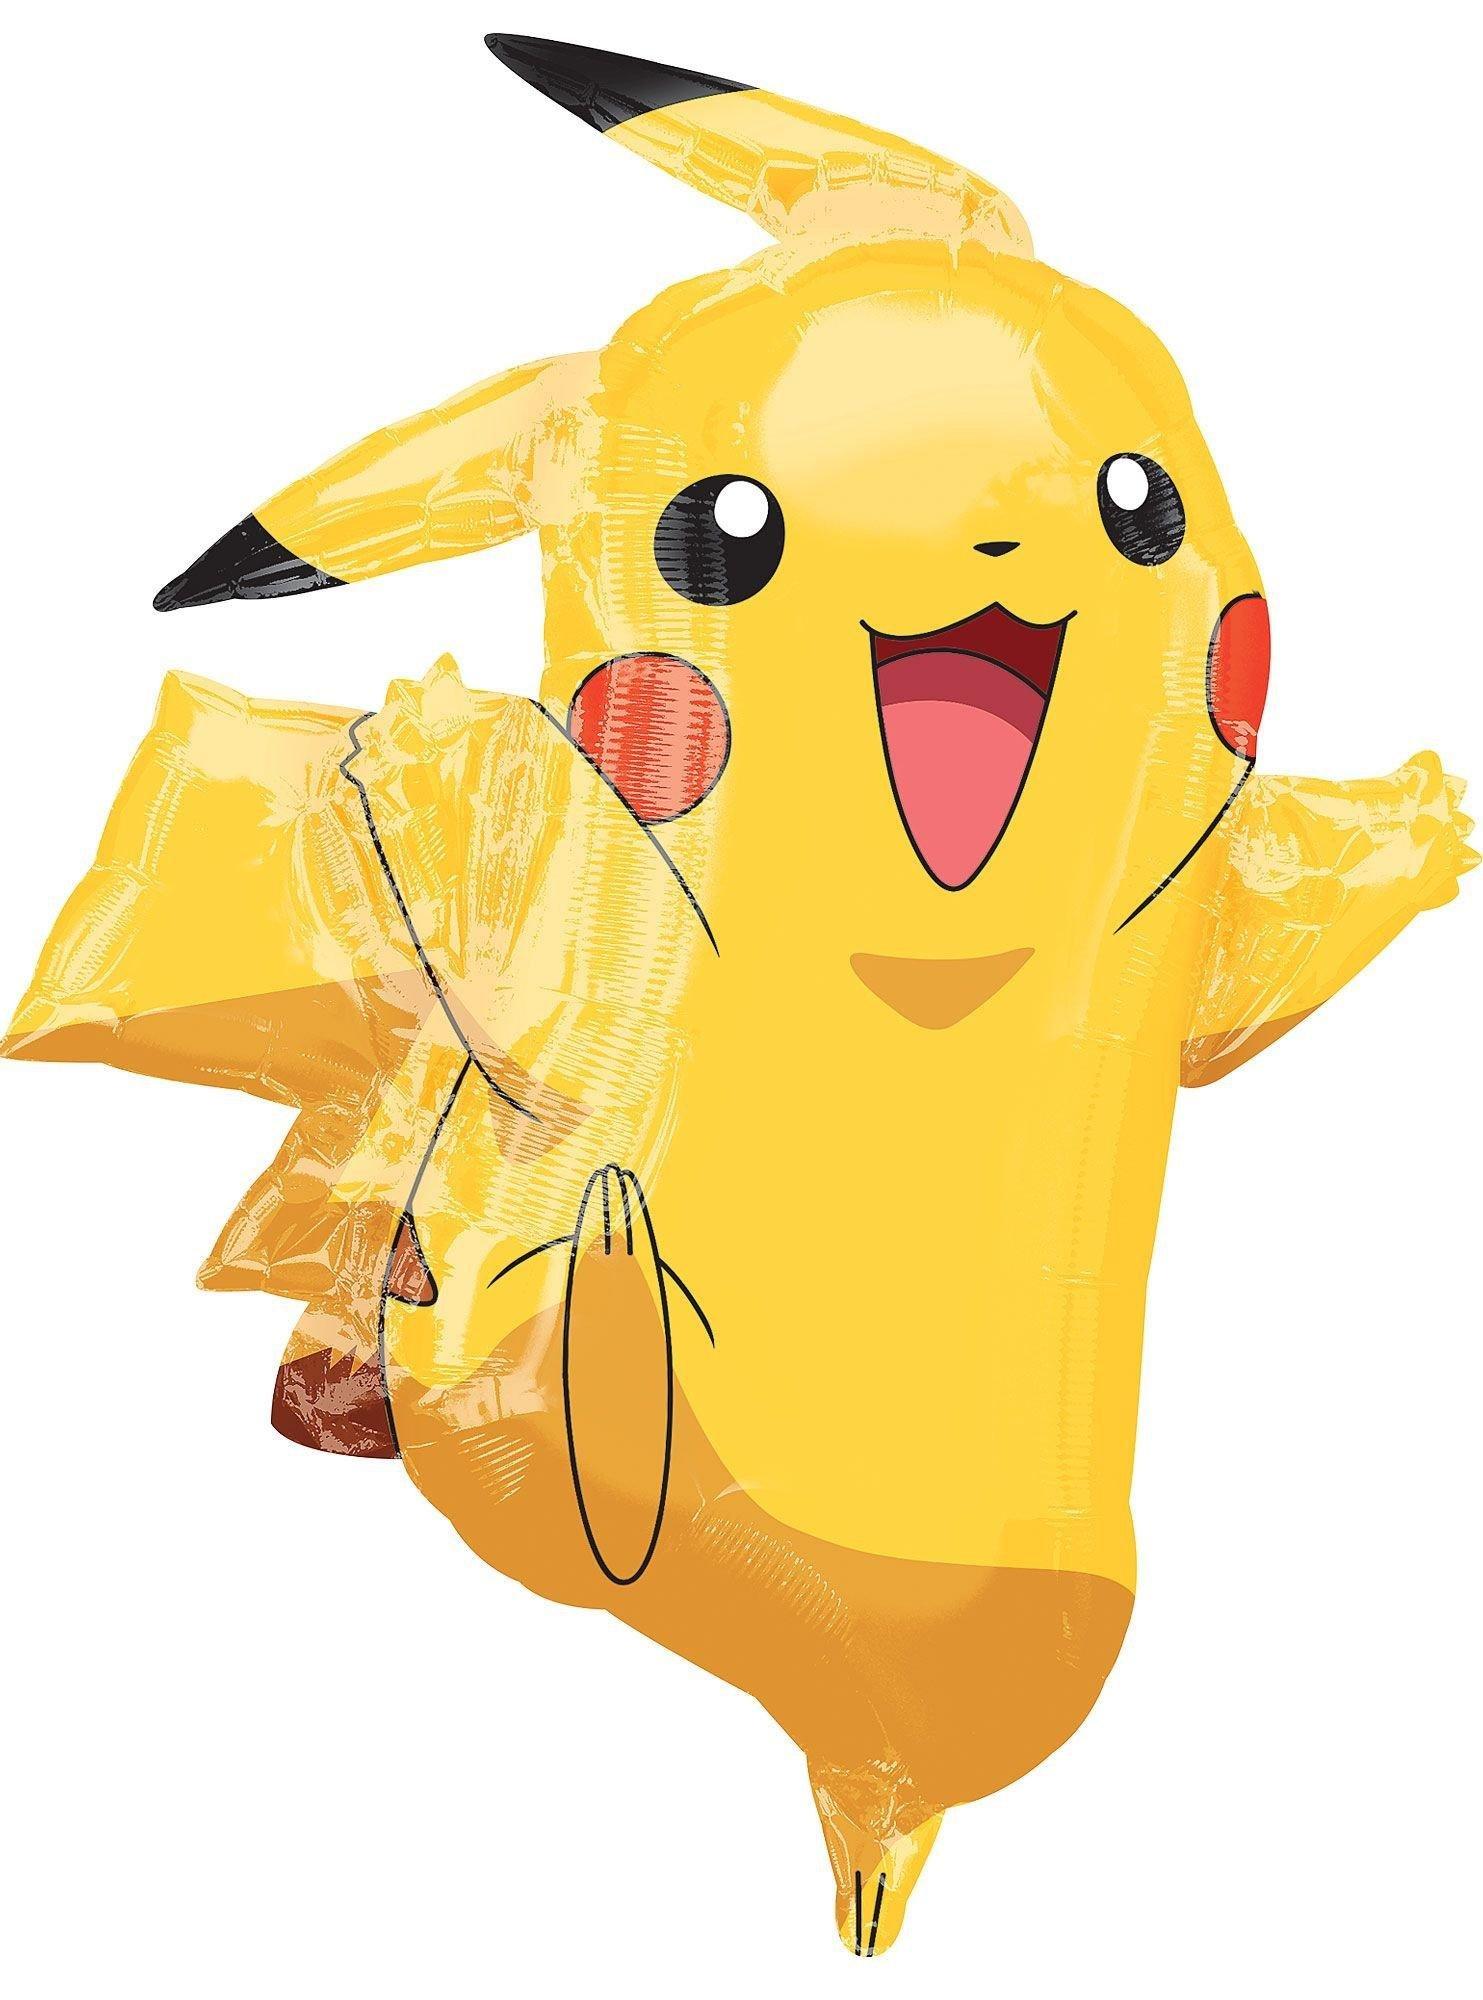 Premium Pikachu Foil Balloon Bouquet with Balloon Weight, 13pc - Pokémon